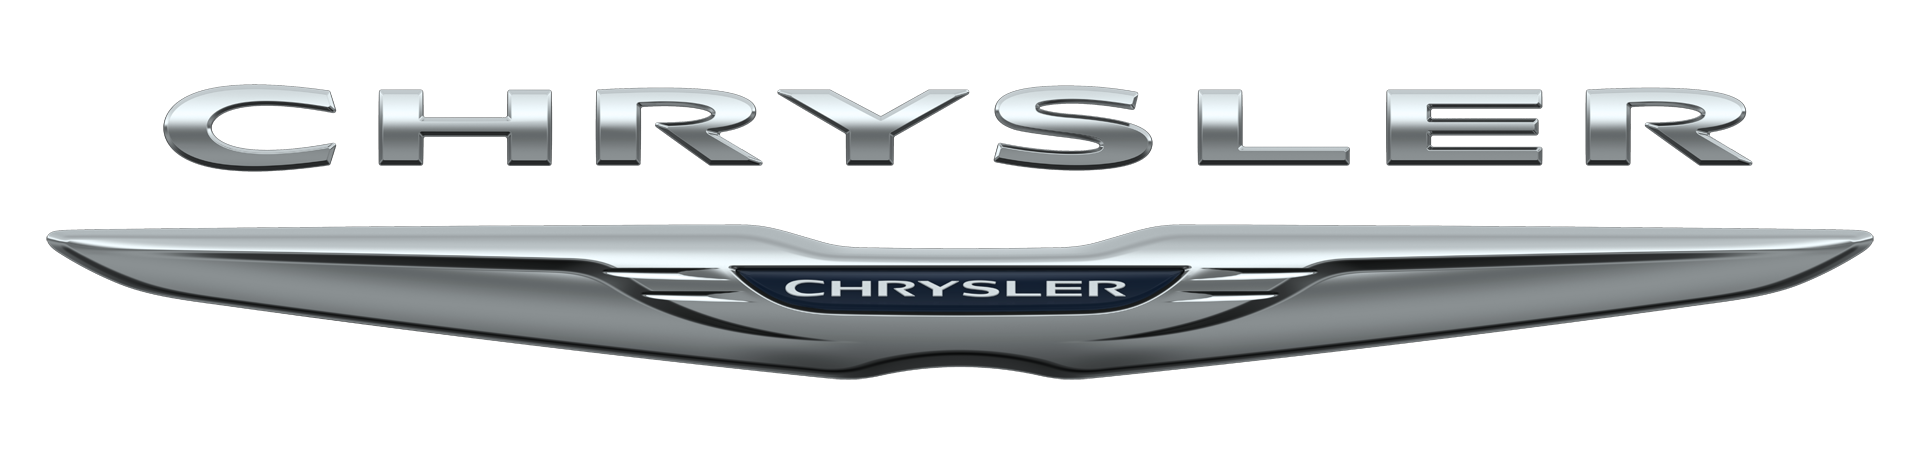 chrysler logo transparent background